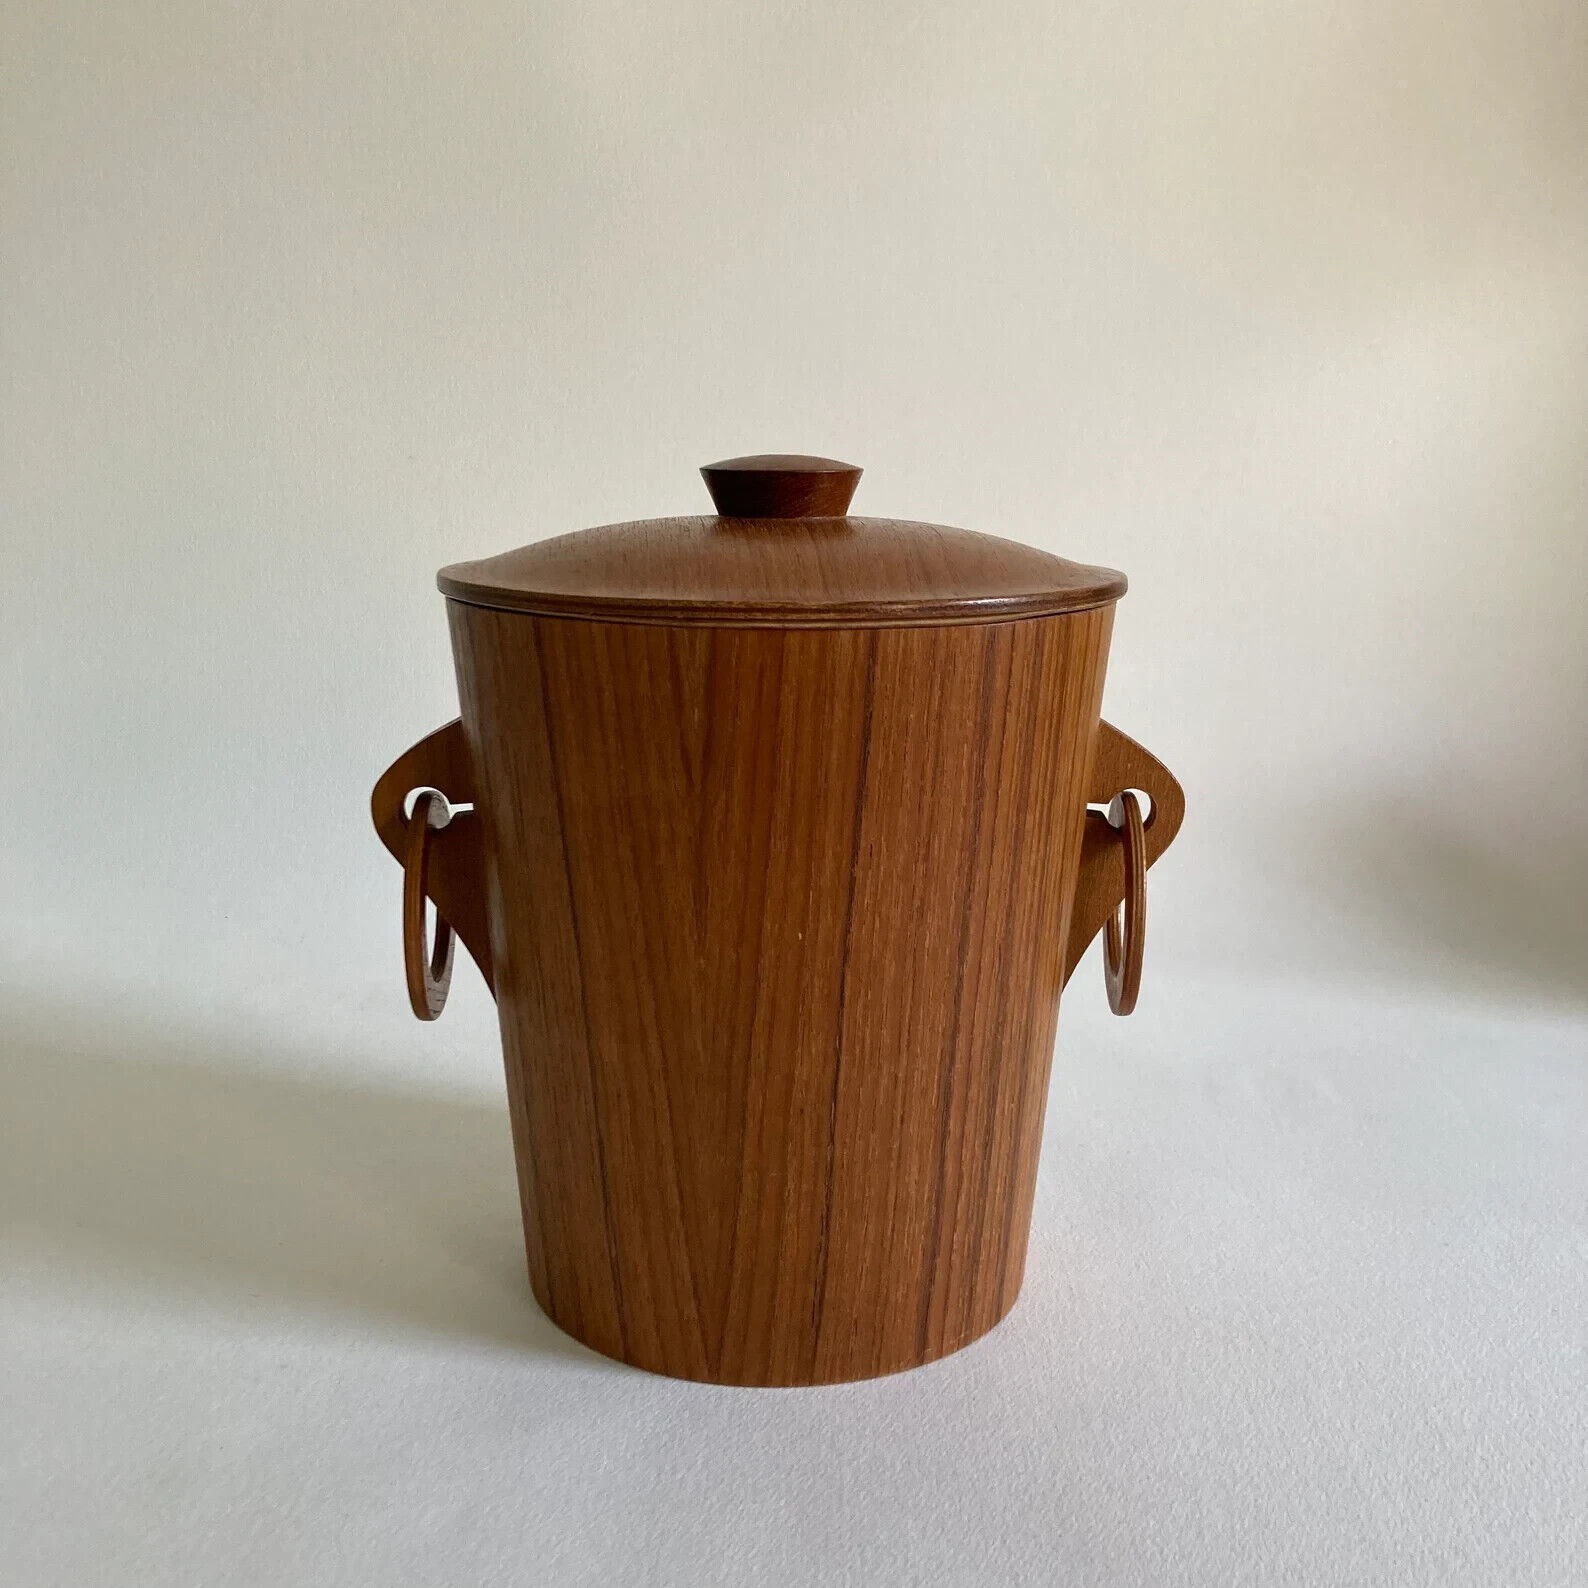 Circa 1965, Wood Ice Bucket w/ Handles – Made in Japan - Mid Century Modern Barw